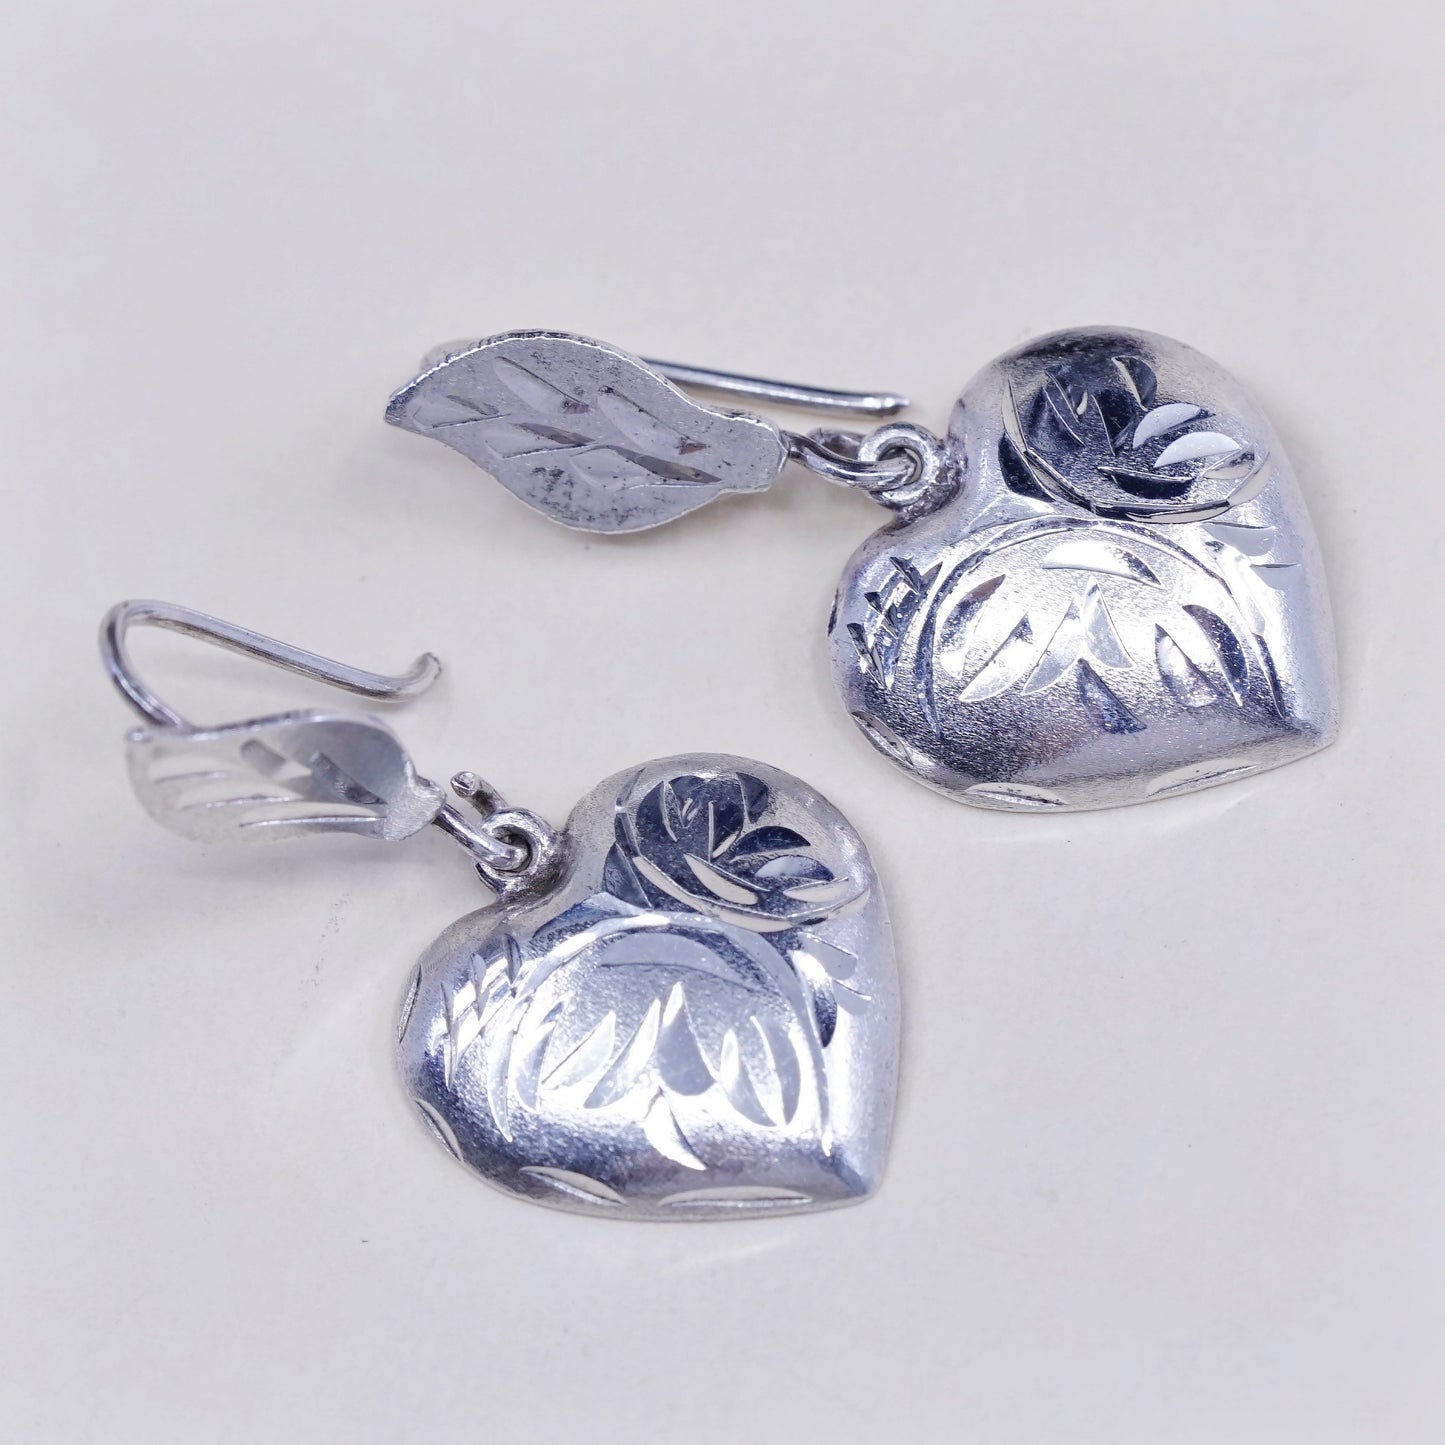 Vintage sterling silver heart shaped drop earrings, 925 textured heart